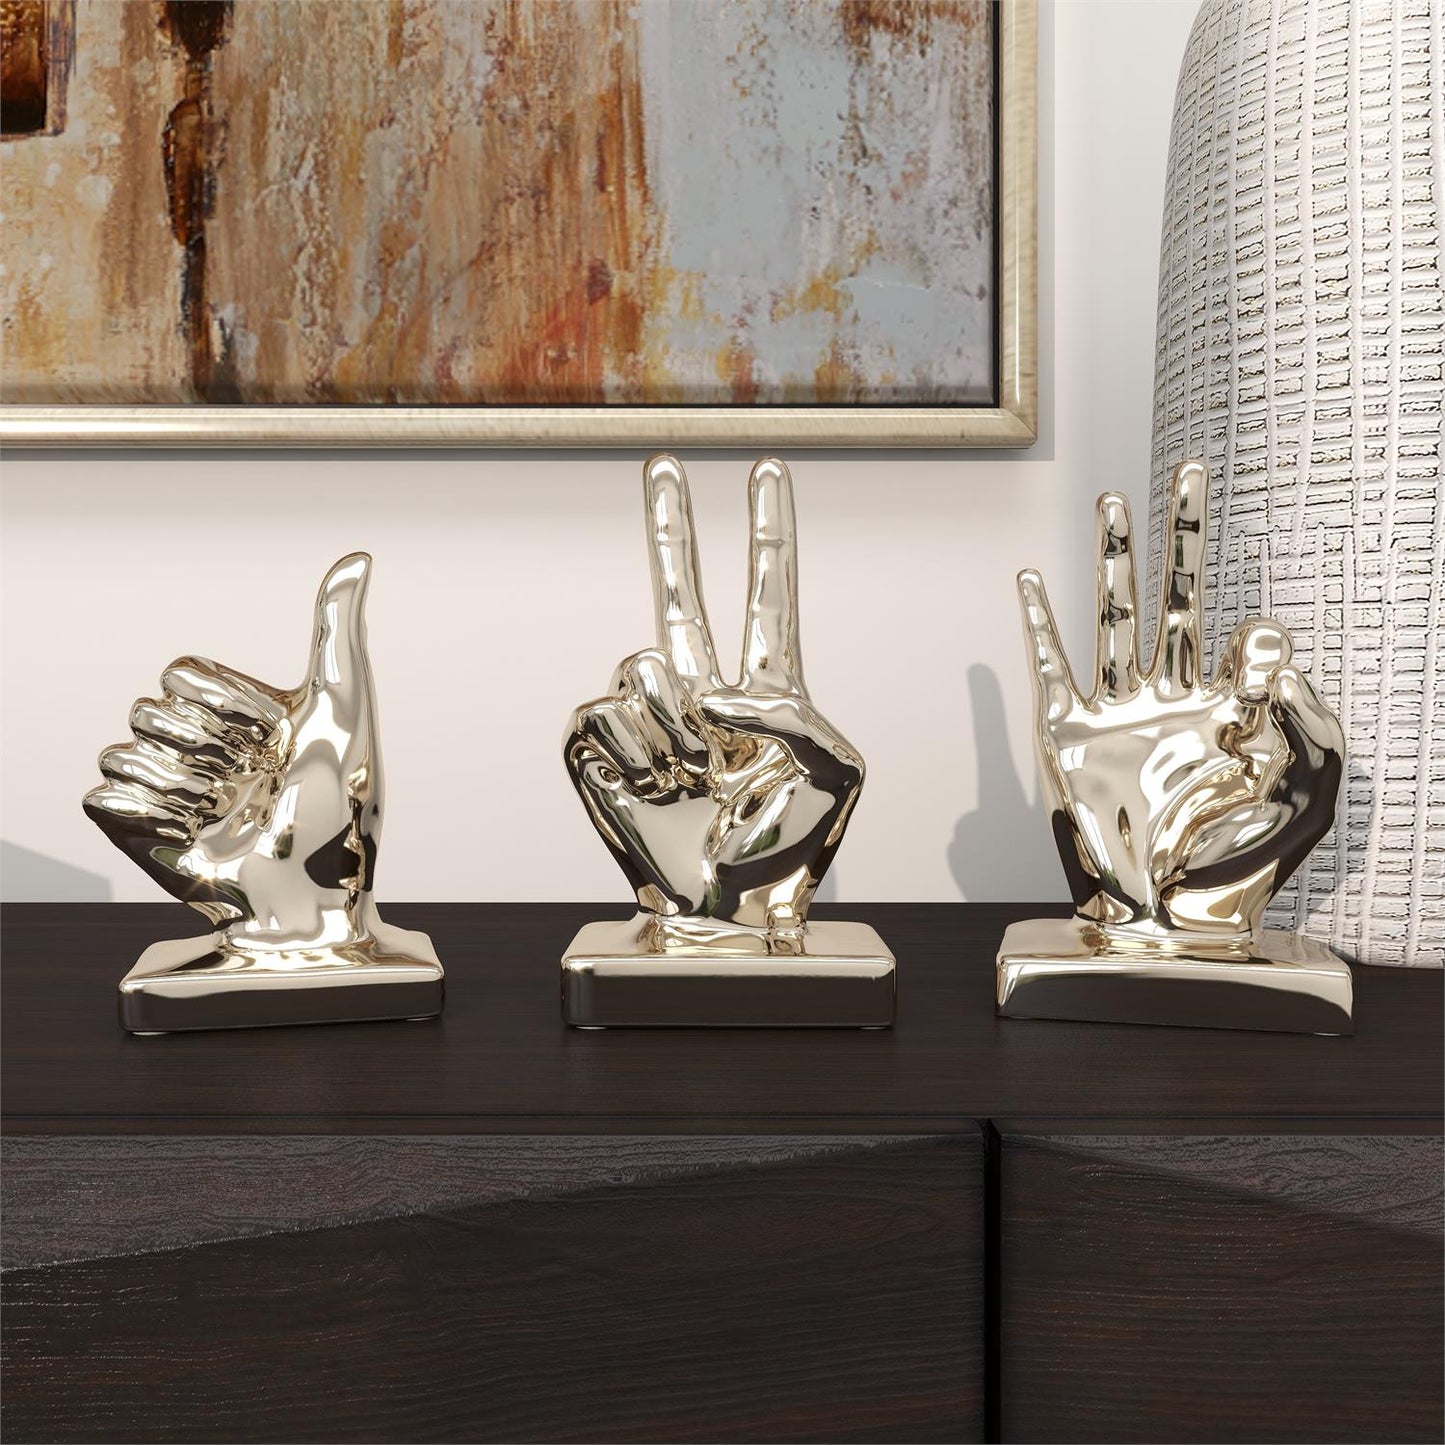 Cosmoliving by Cosmopolitan Silver Porcelain Hands set of 3